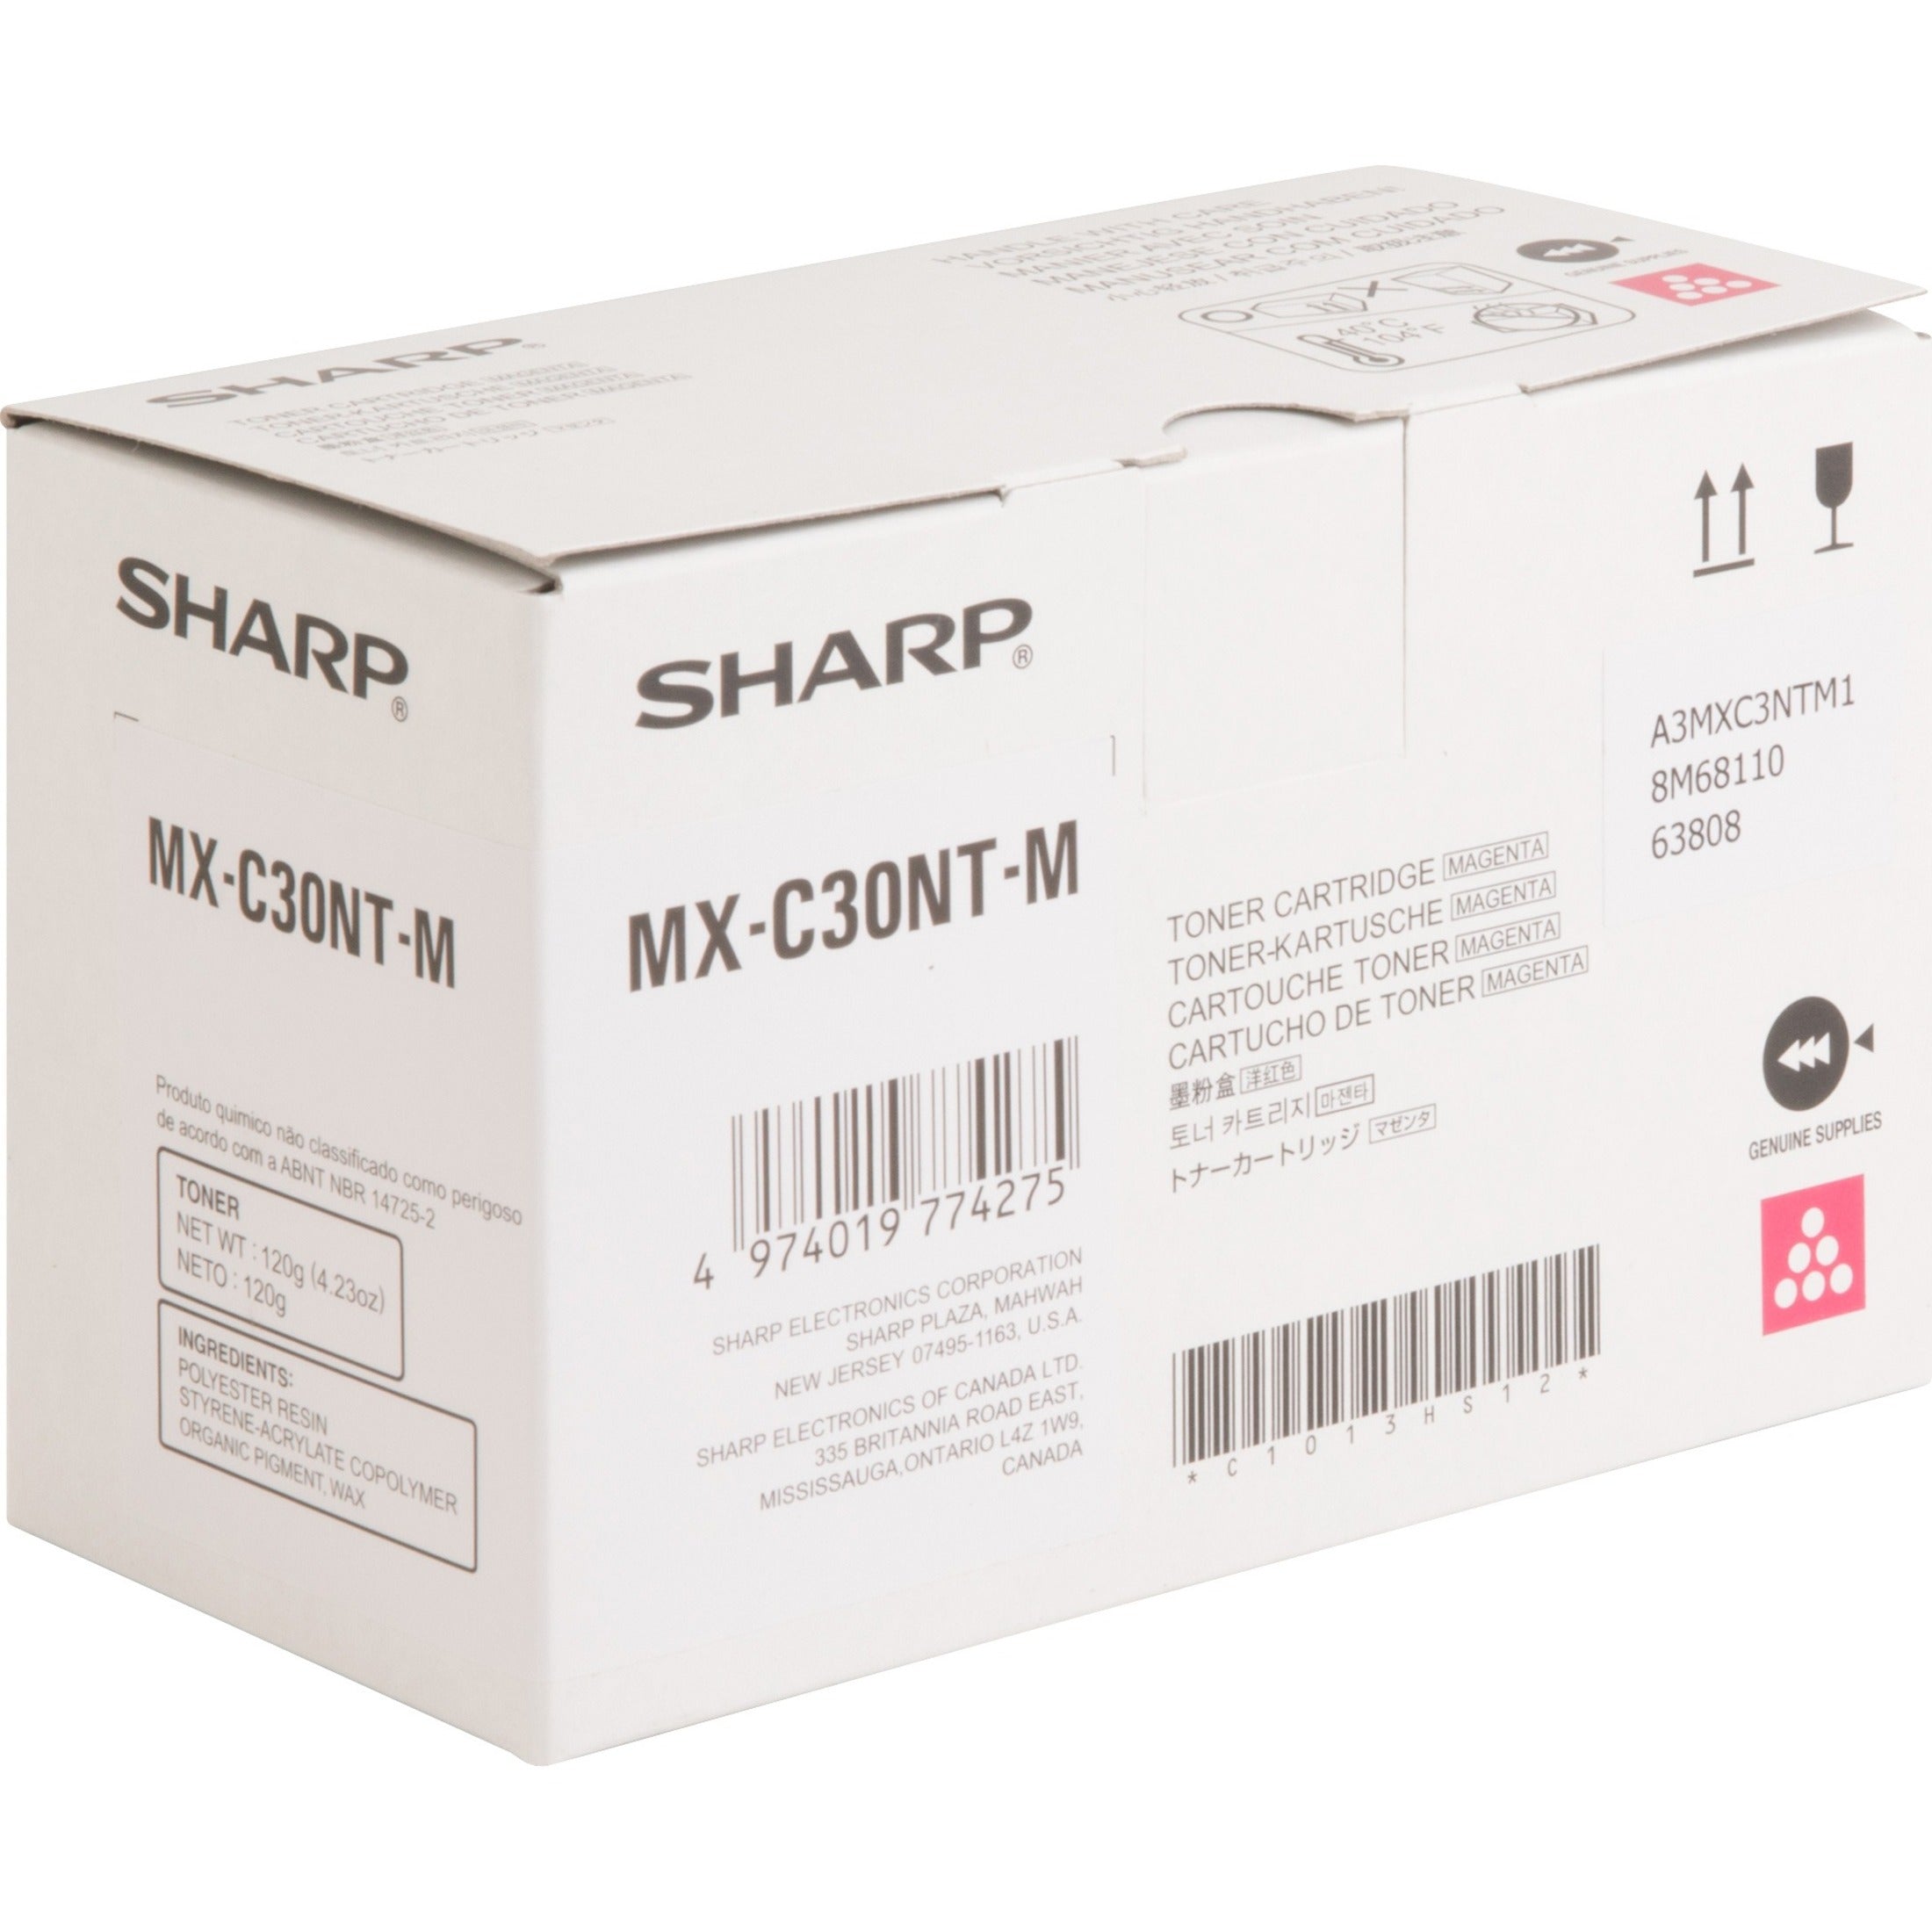 Sharp MXC30NTM Magenta Toner Cartridge, 6000 Page Yield, for MX-C300